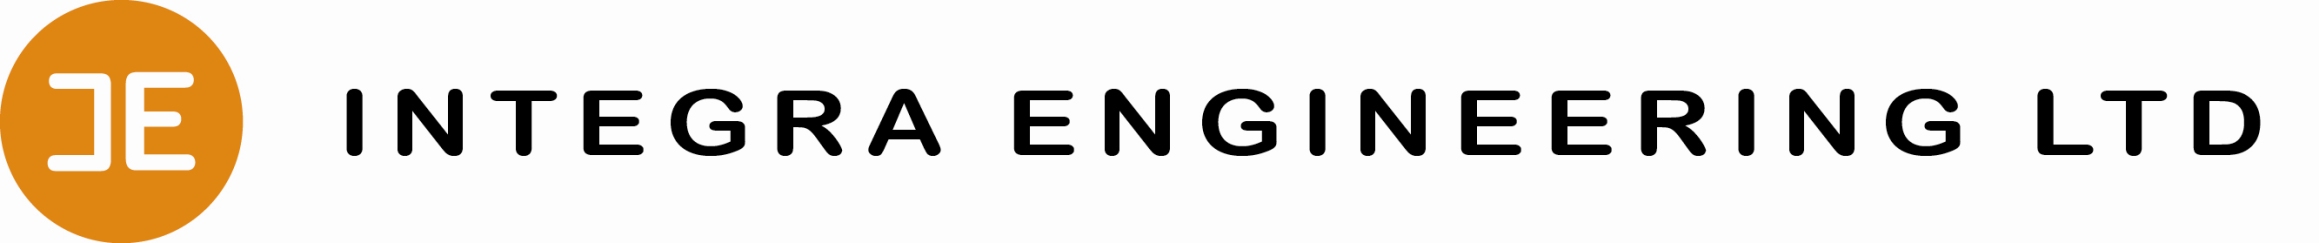 Integra Engineering Ltd